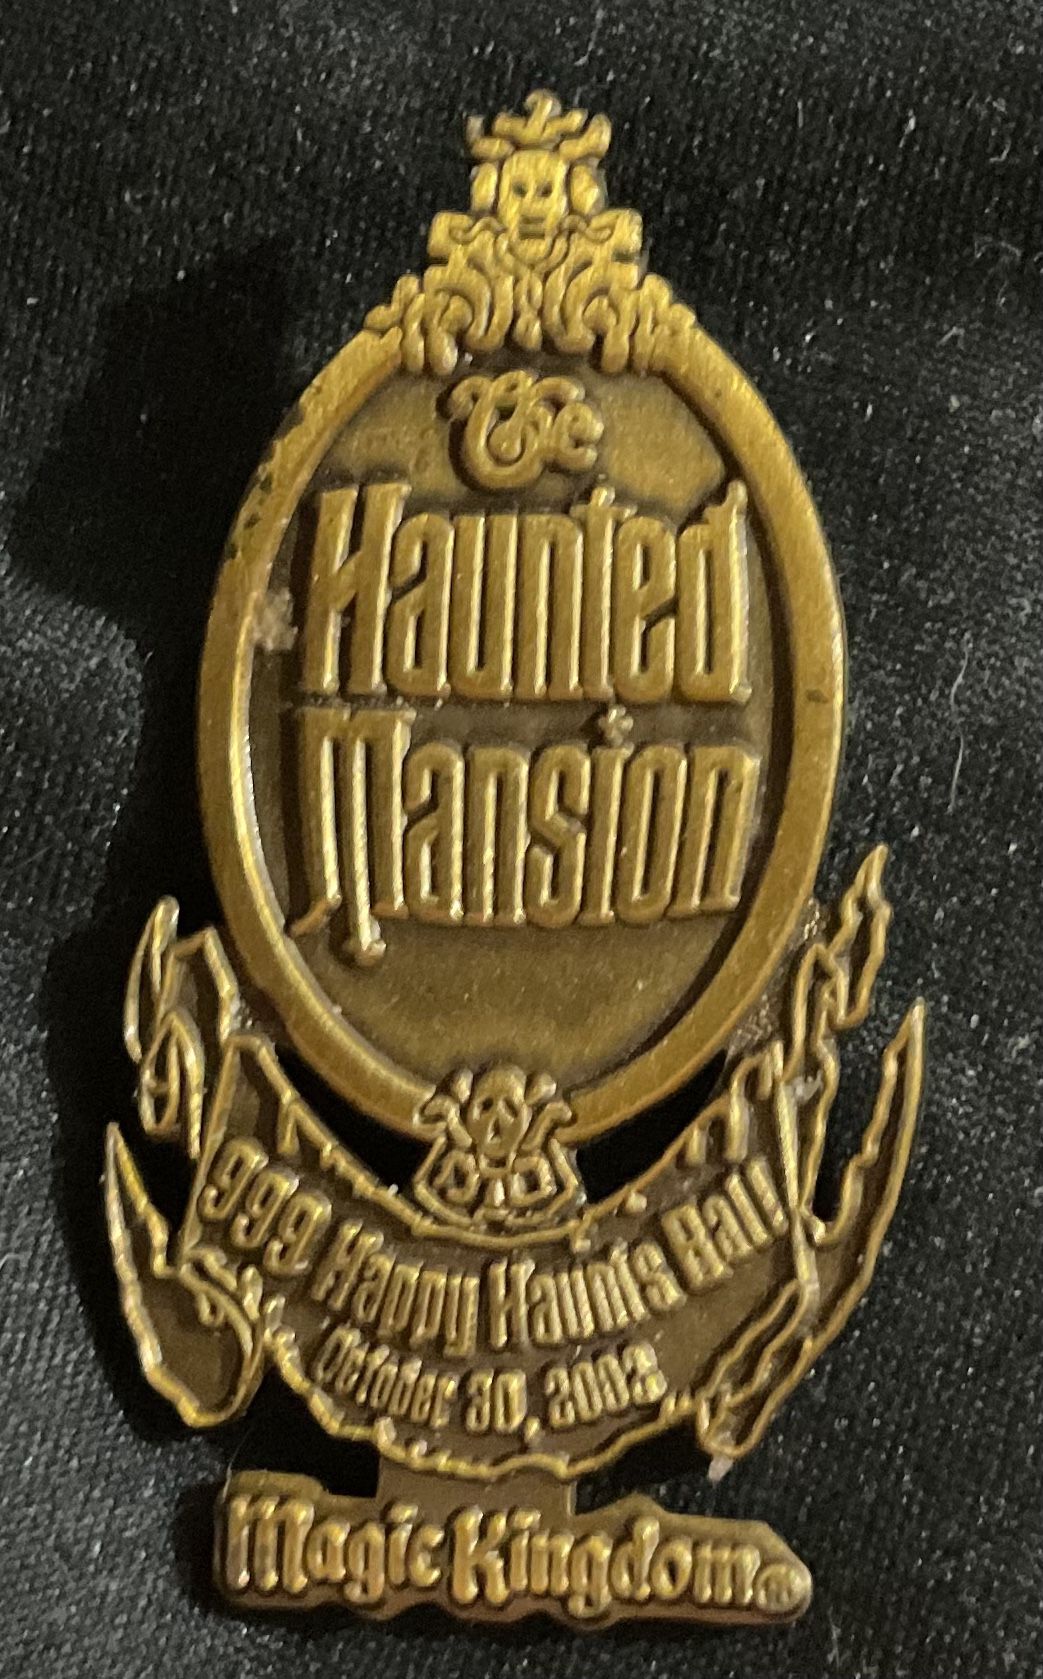 Disneys Haunted Mansion Pin Le 150